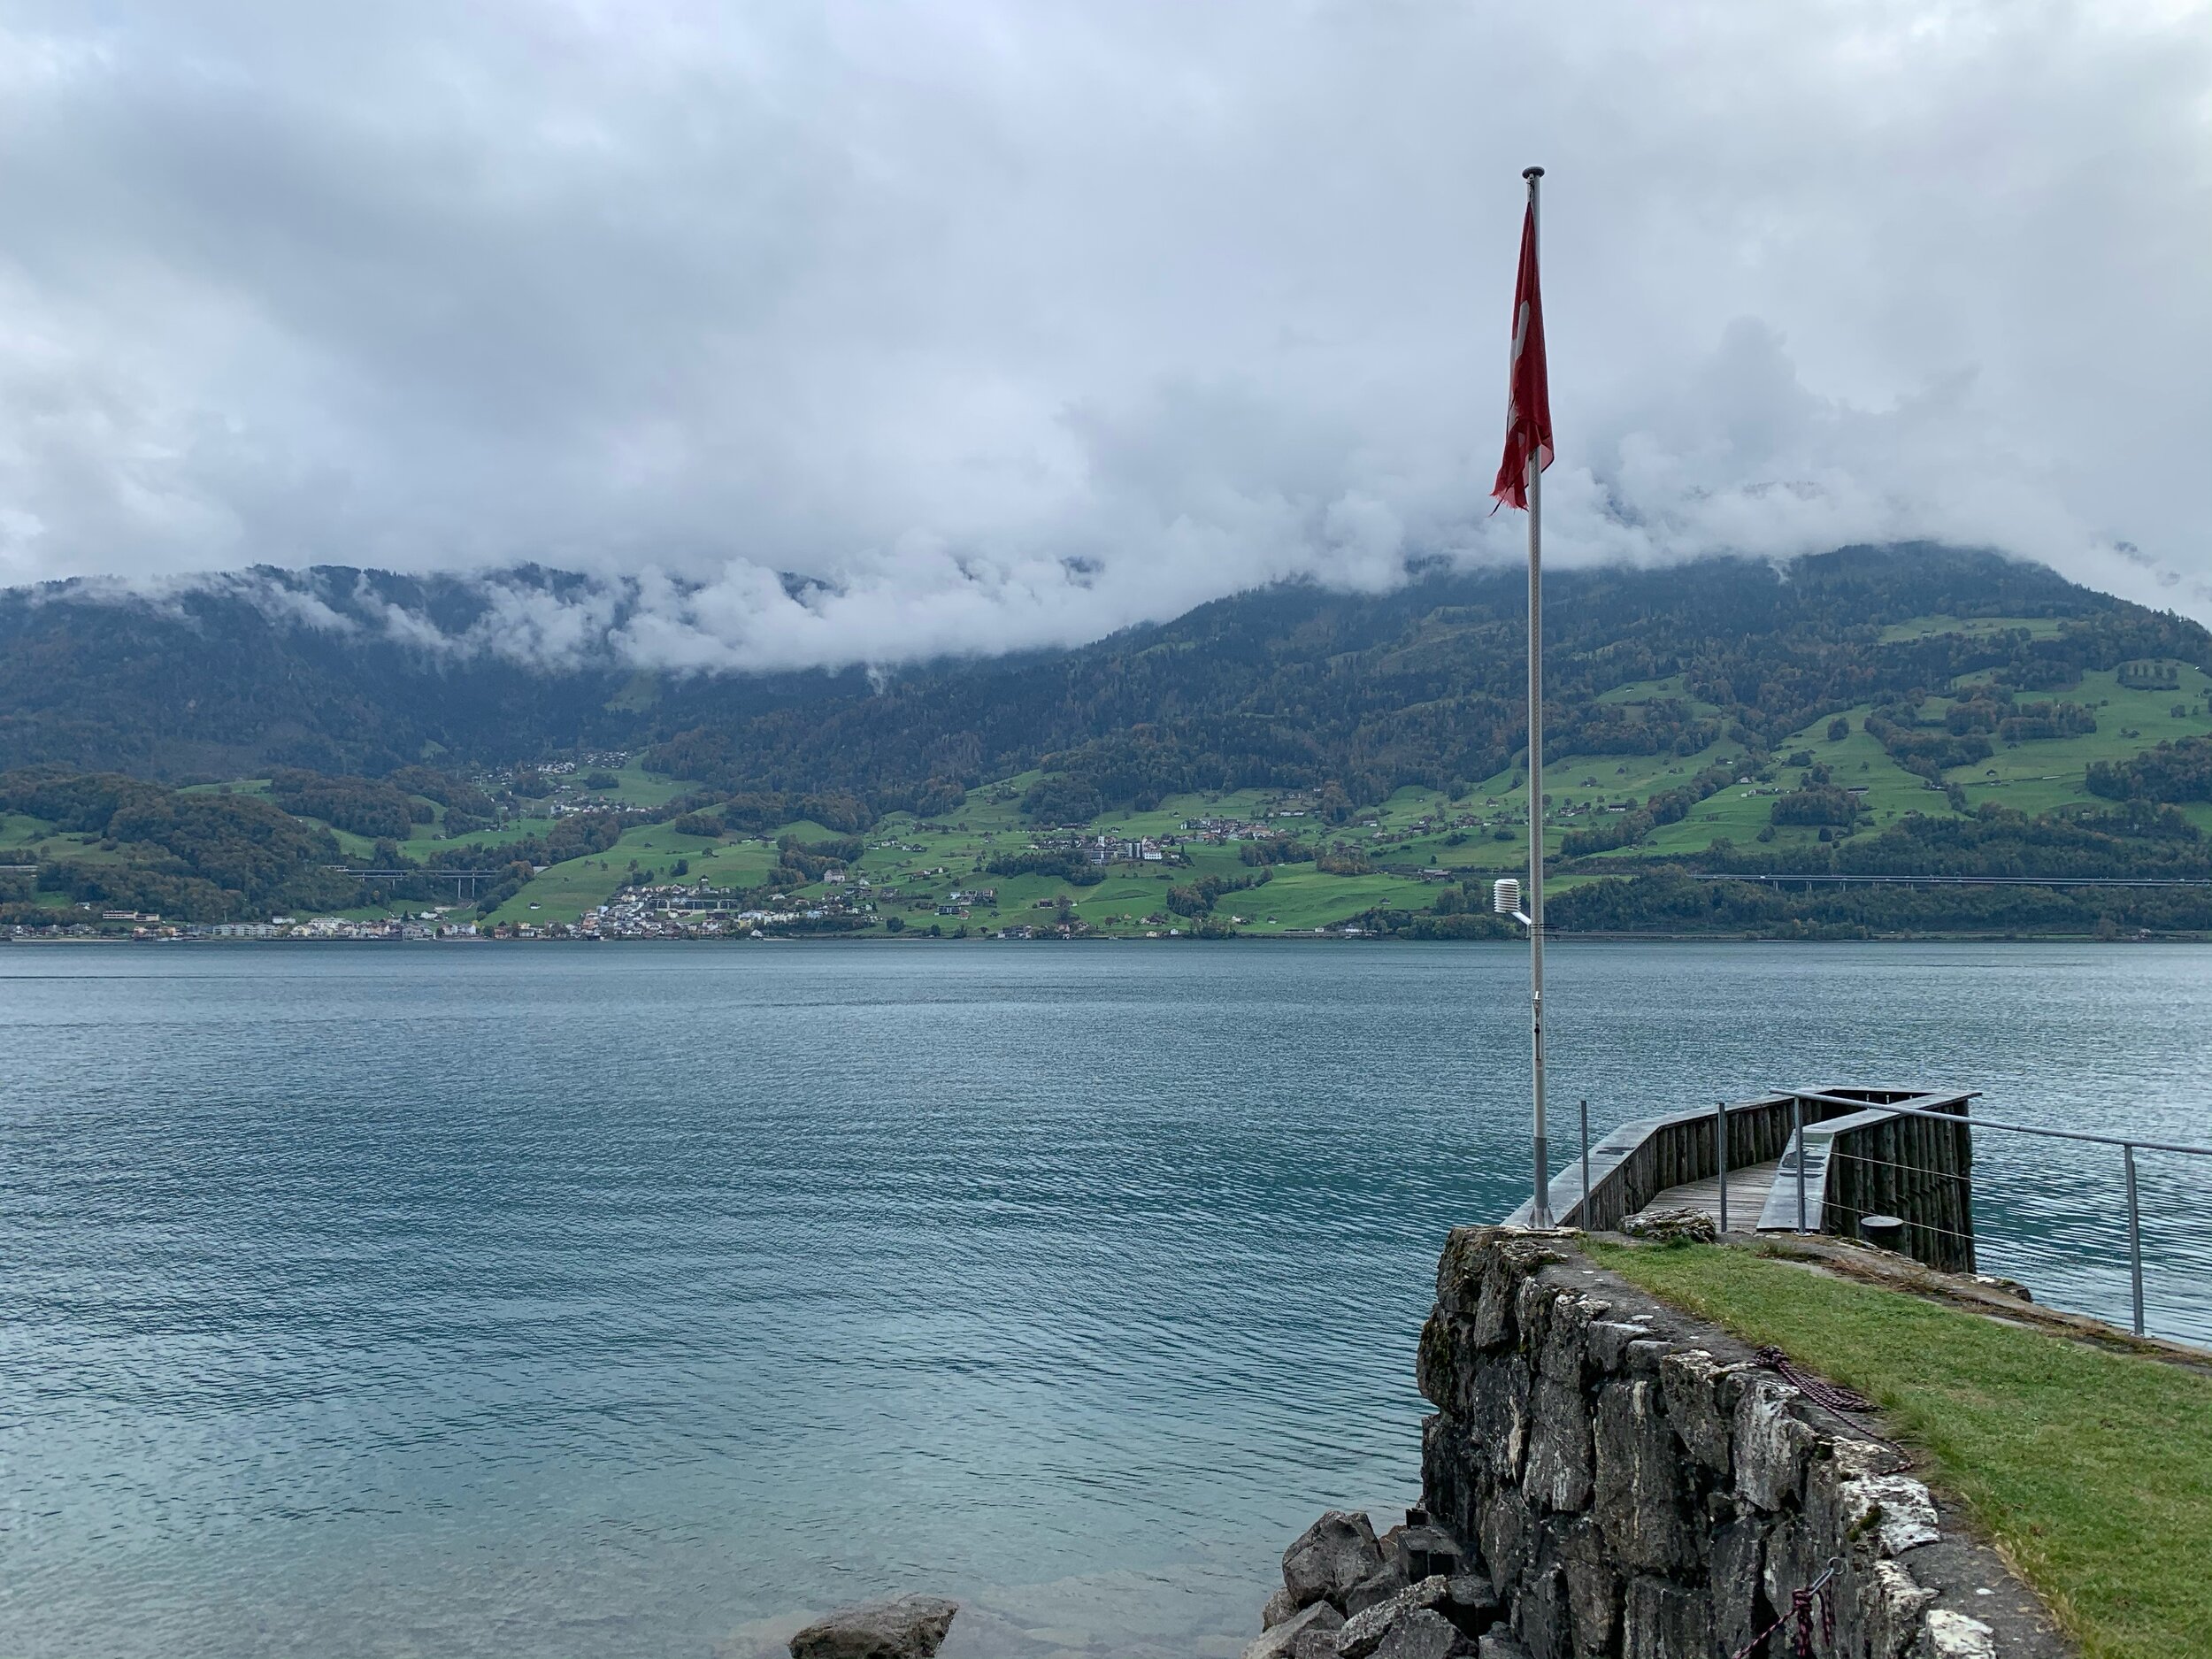 MeteoHelix lake front home weather station at Switzerland wine yard